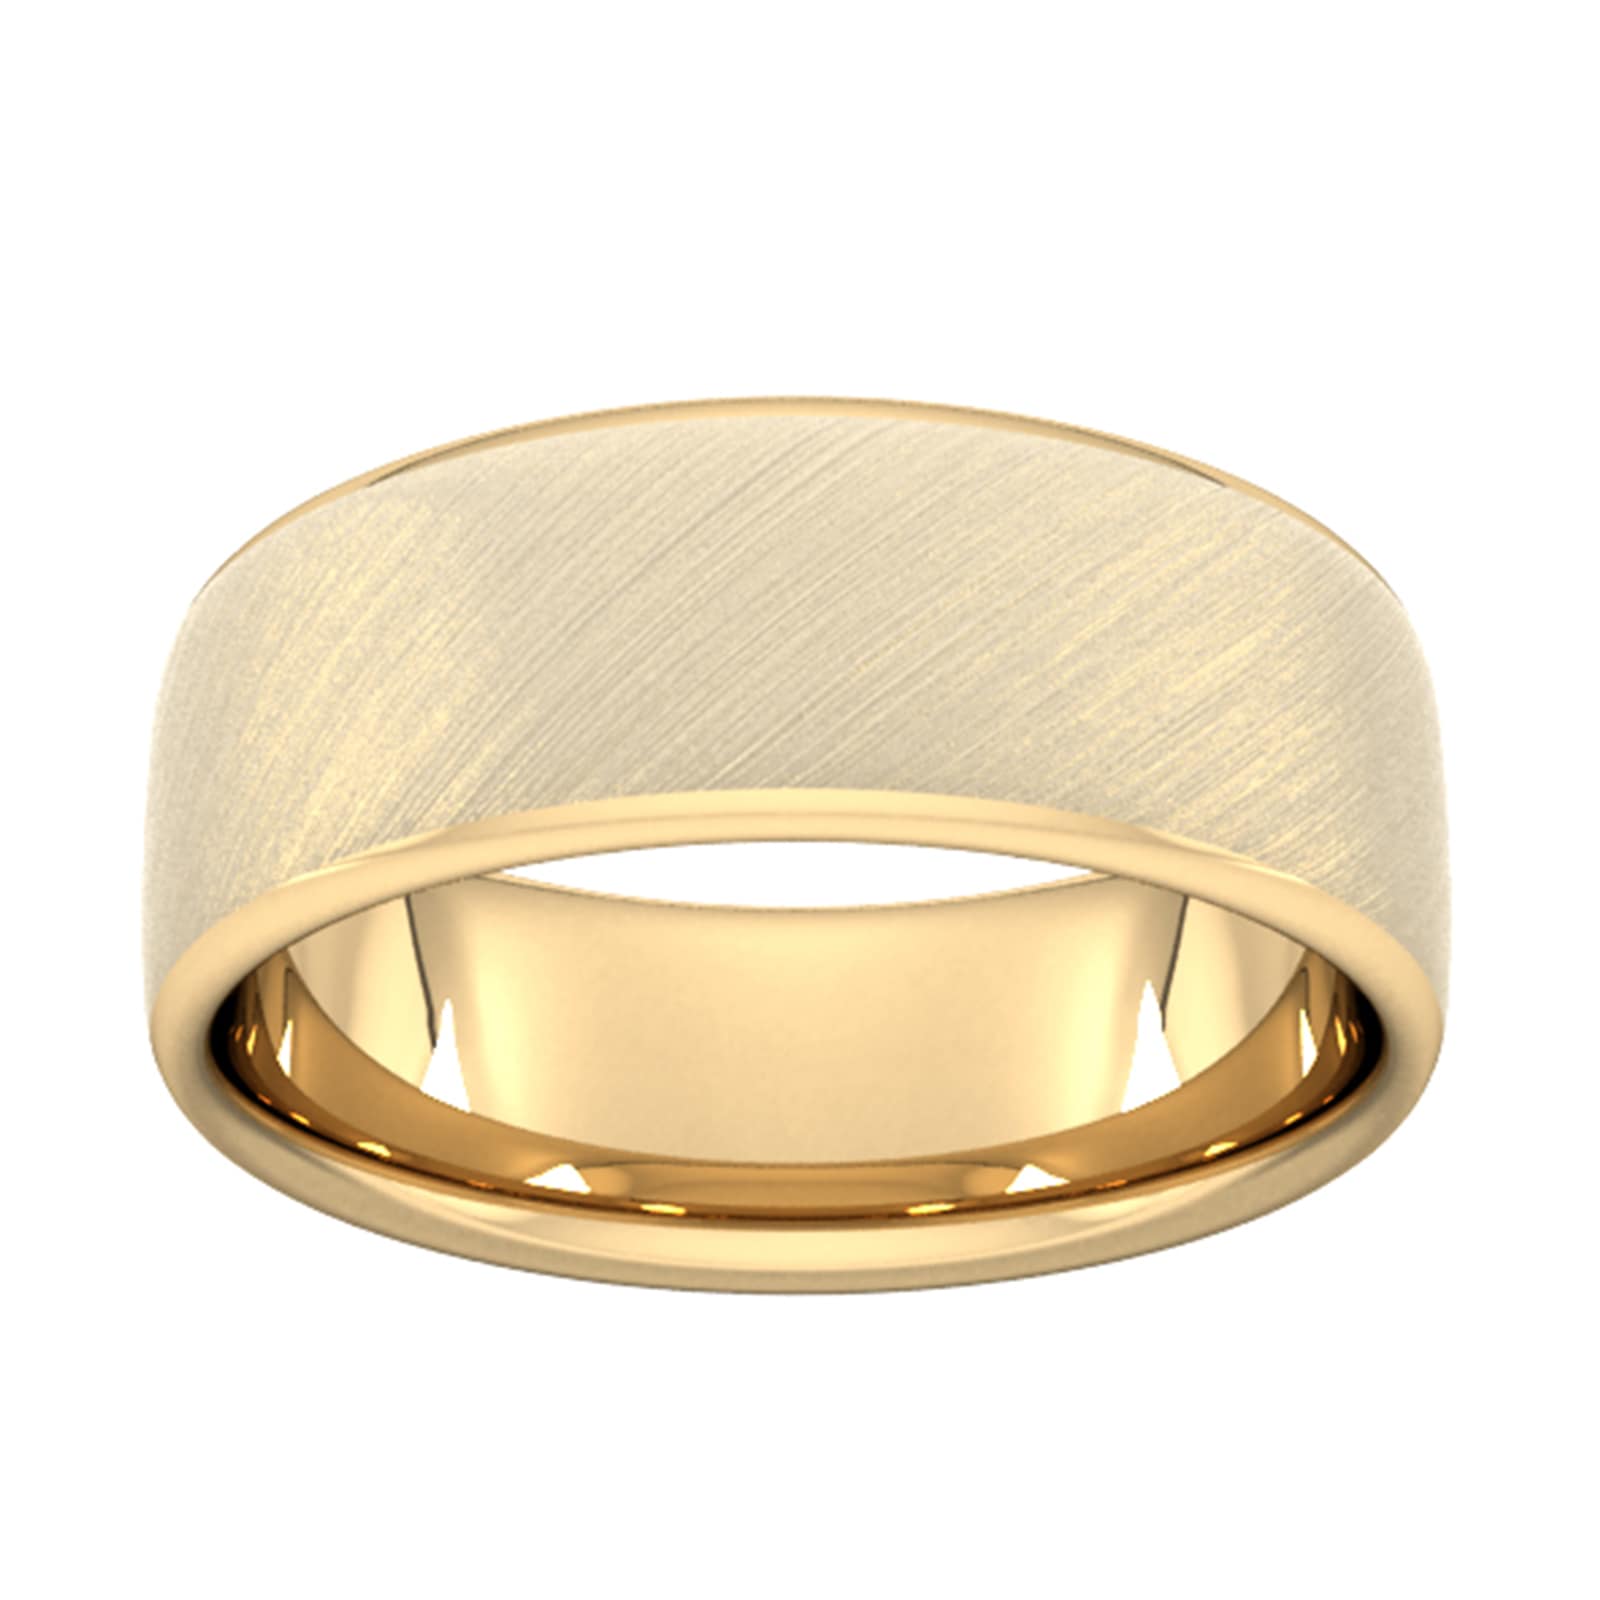 8mm Traditional Court Heavy Diagonal Matt Finish Wedding Ring In 18 Carat Yellow Gold - Ring Size V